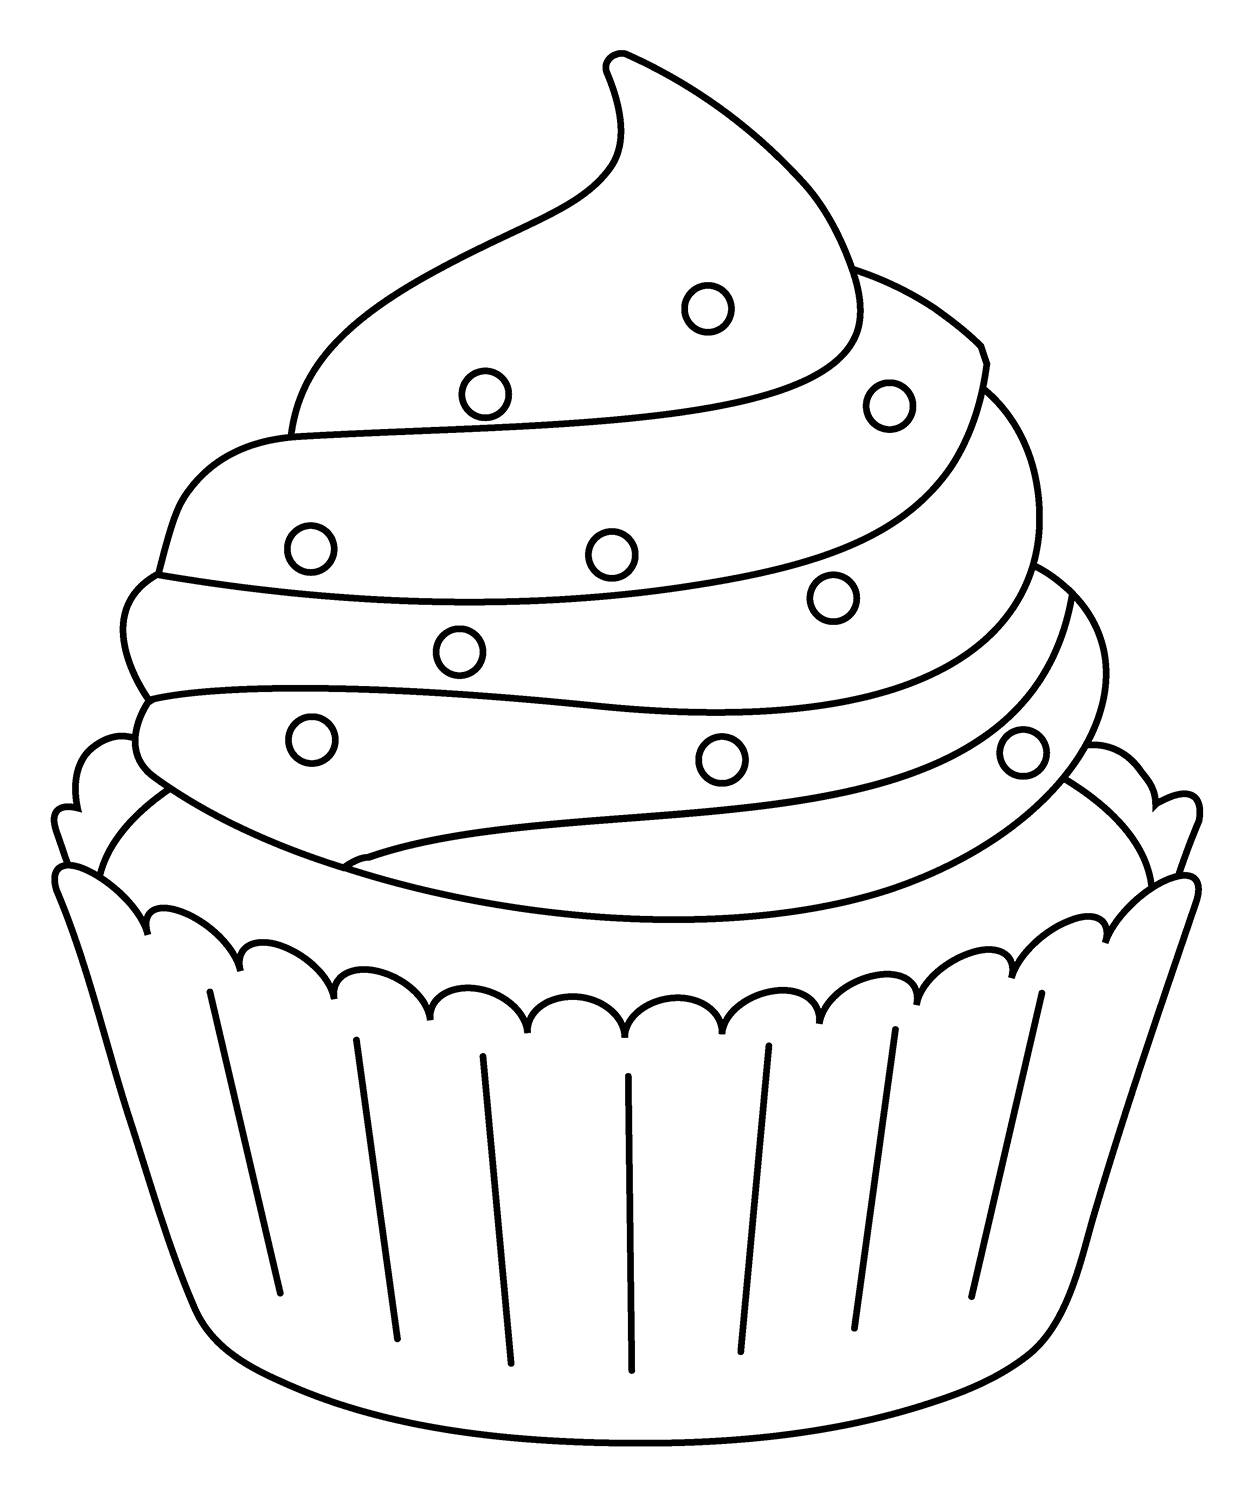 Cupcake Emoji coloring page - ColouringPages